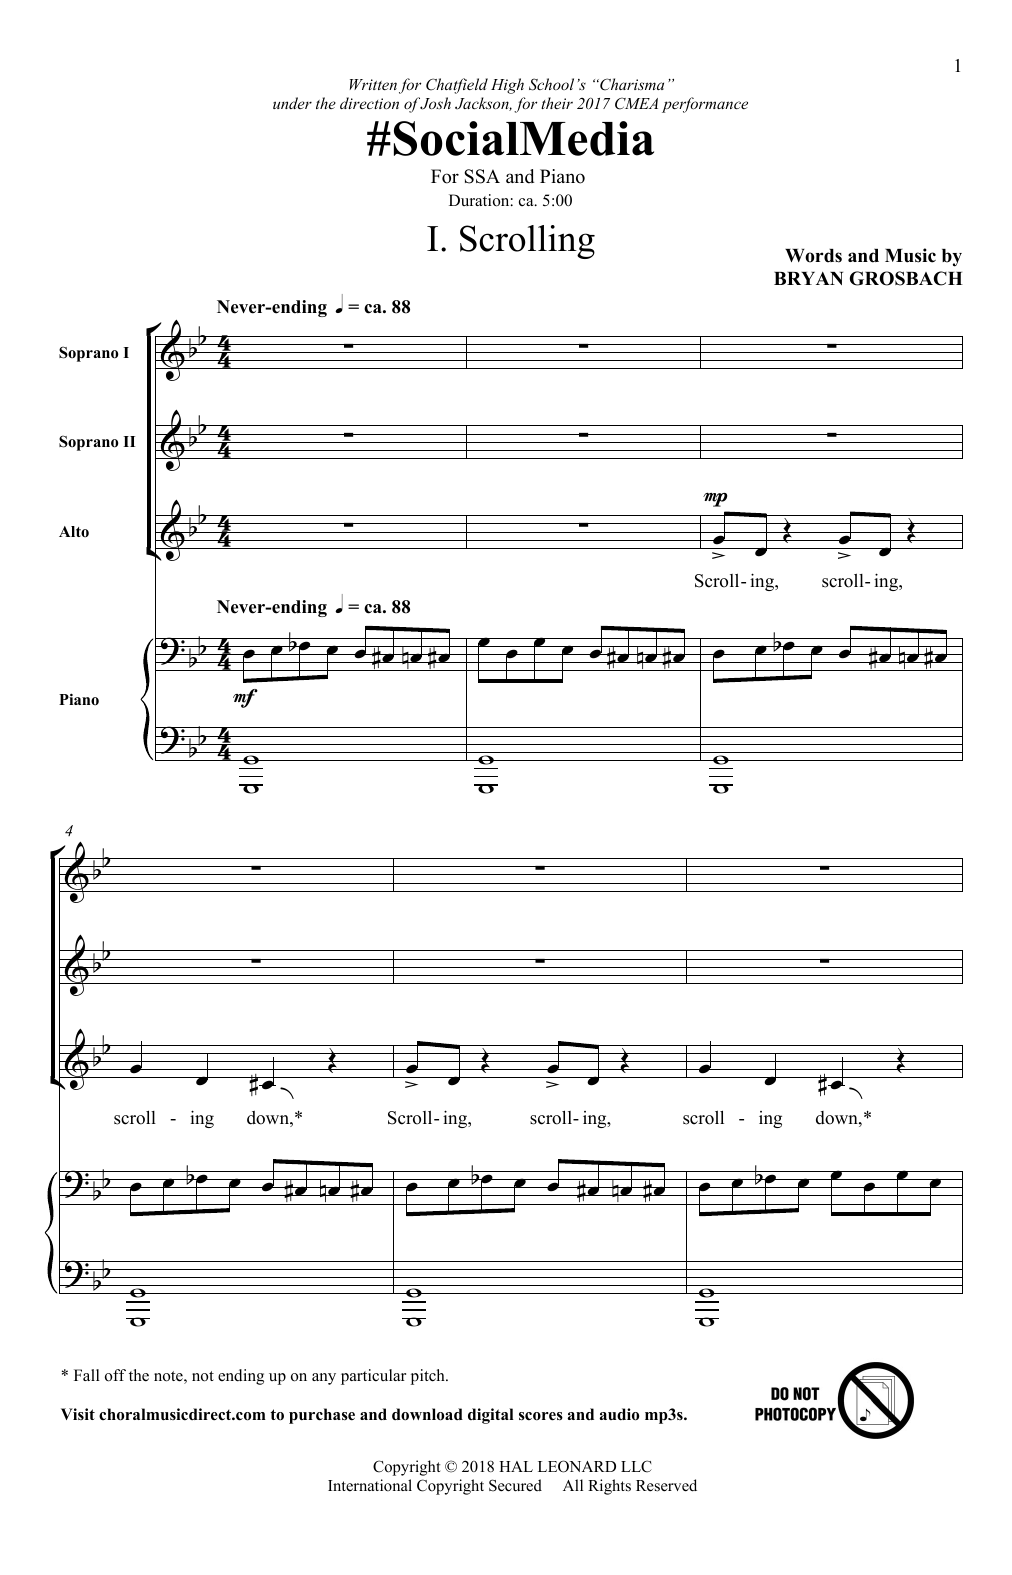 Bryan Grosbach #SocialMedia Sheet Music Notes & Chords for SSA Choir - Download or Print PDF